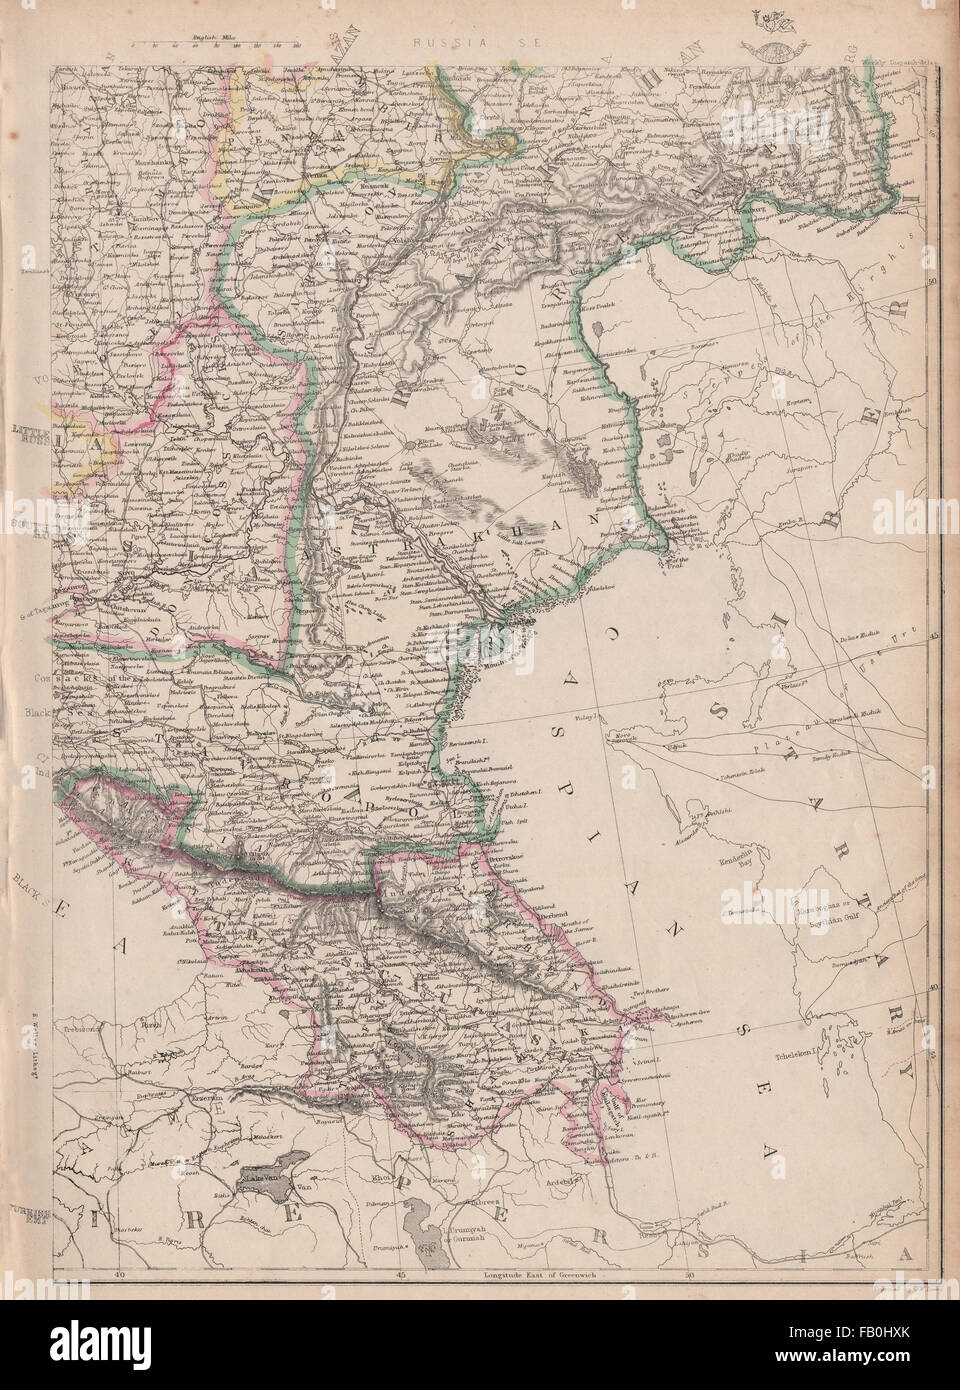 RUSSIA IN EUROPE SE.Transcaucasia Stavropol Astrakhan Caspian.JW LOWRY, 1862 map Stock Photo